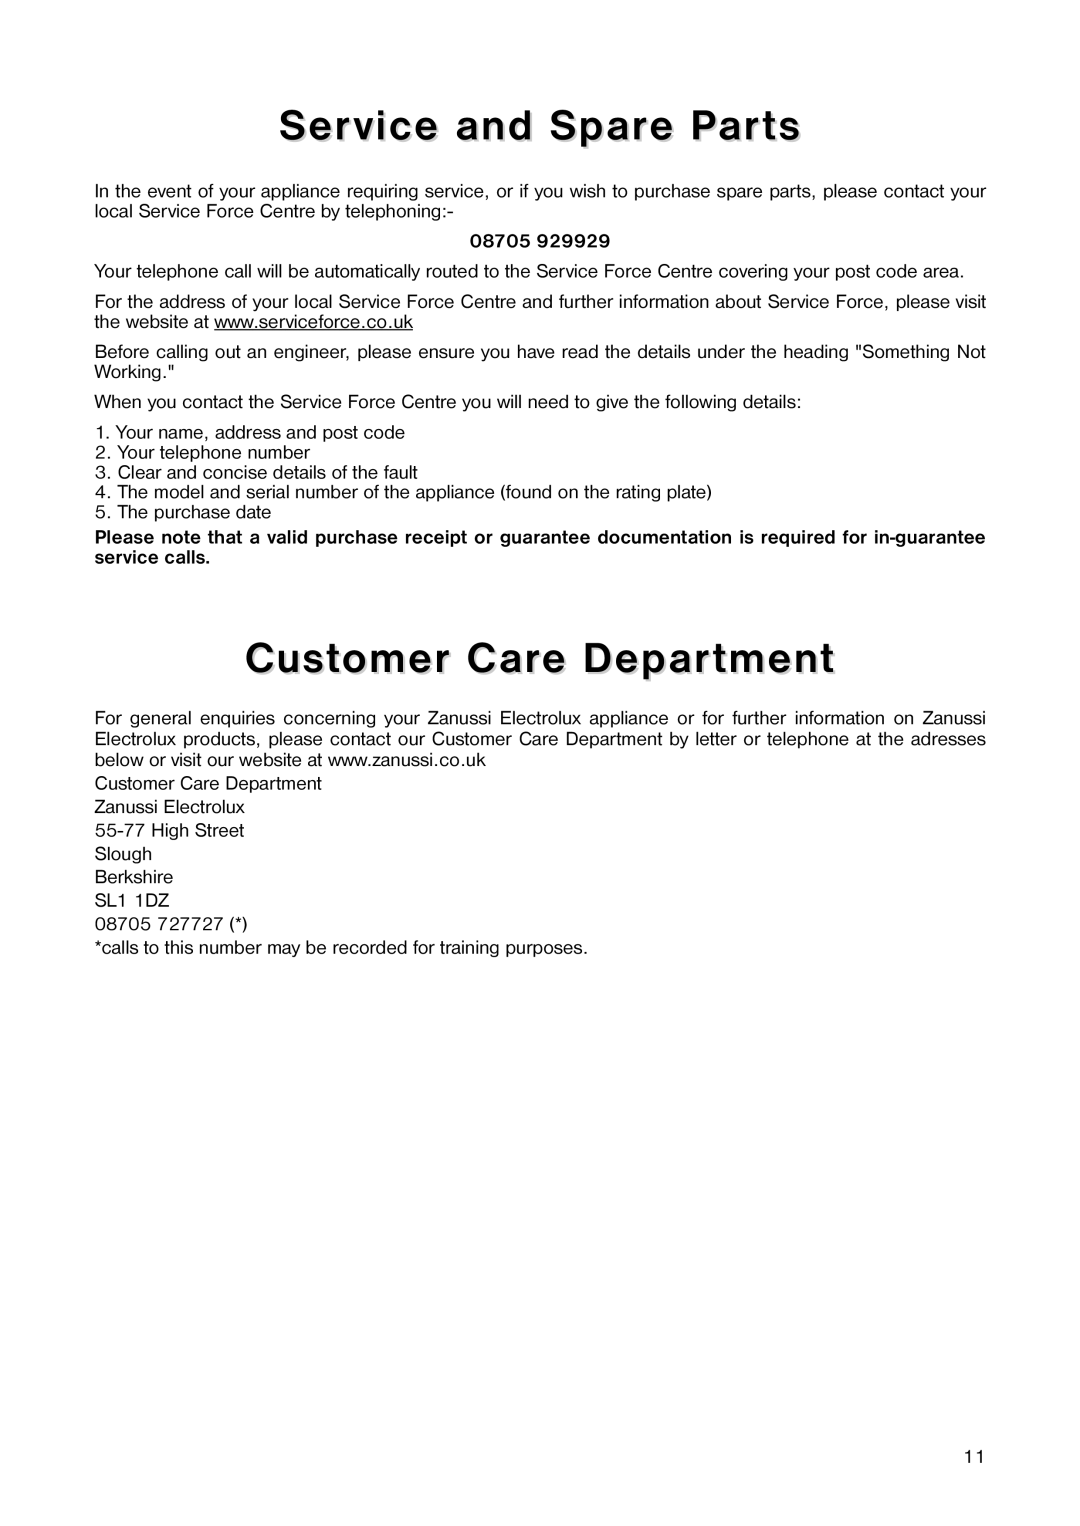 Zanussi ZR 23 W manual Service and Spare Parts, Customer Care Department, 08705 